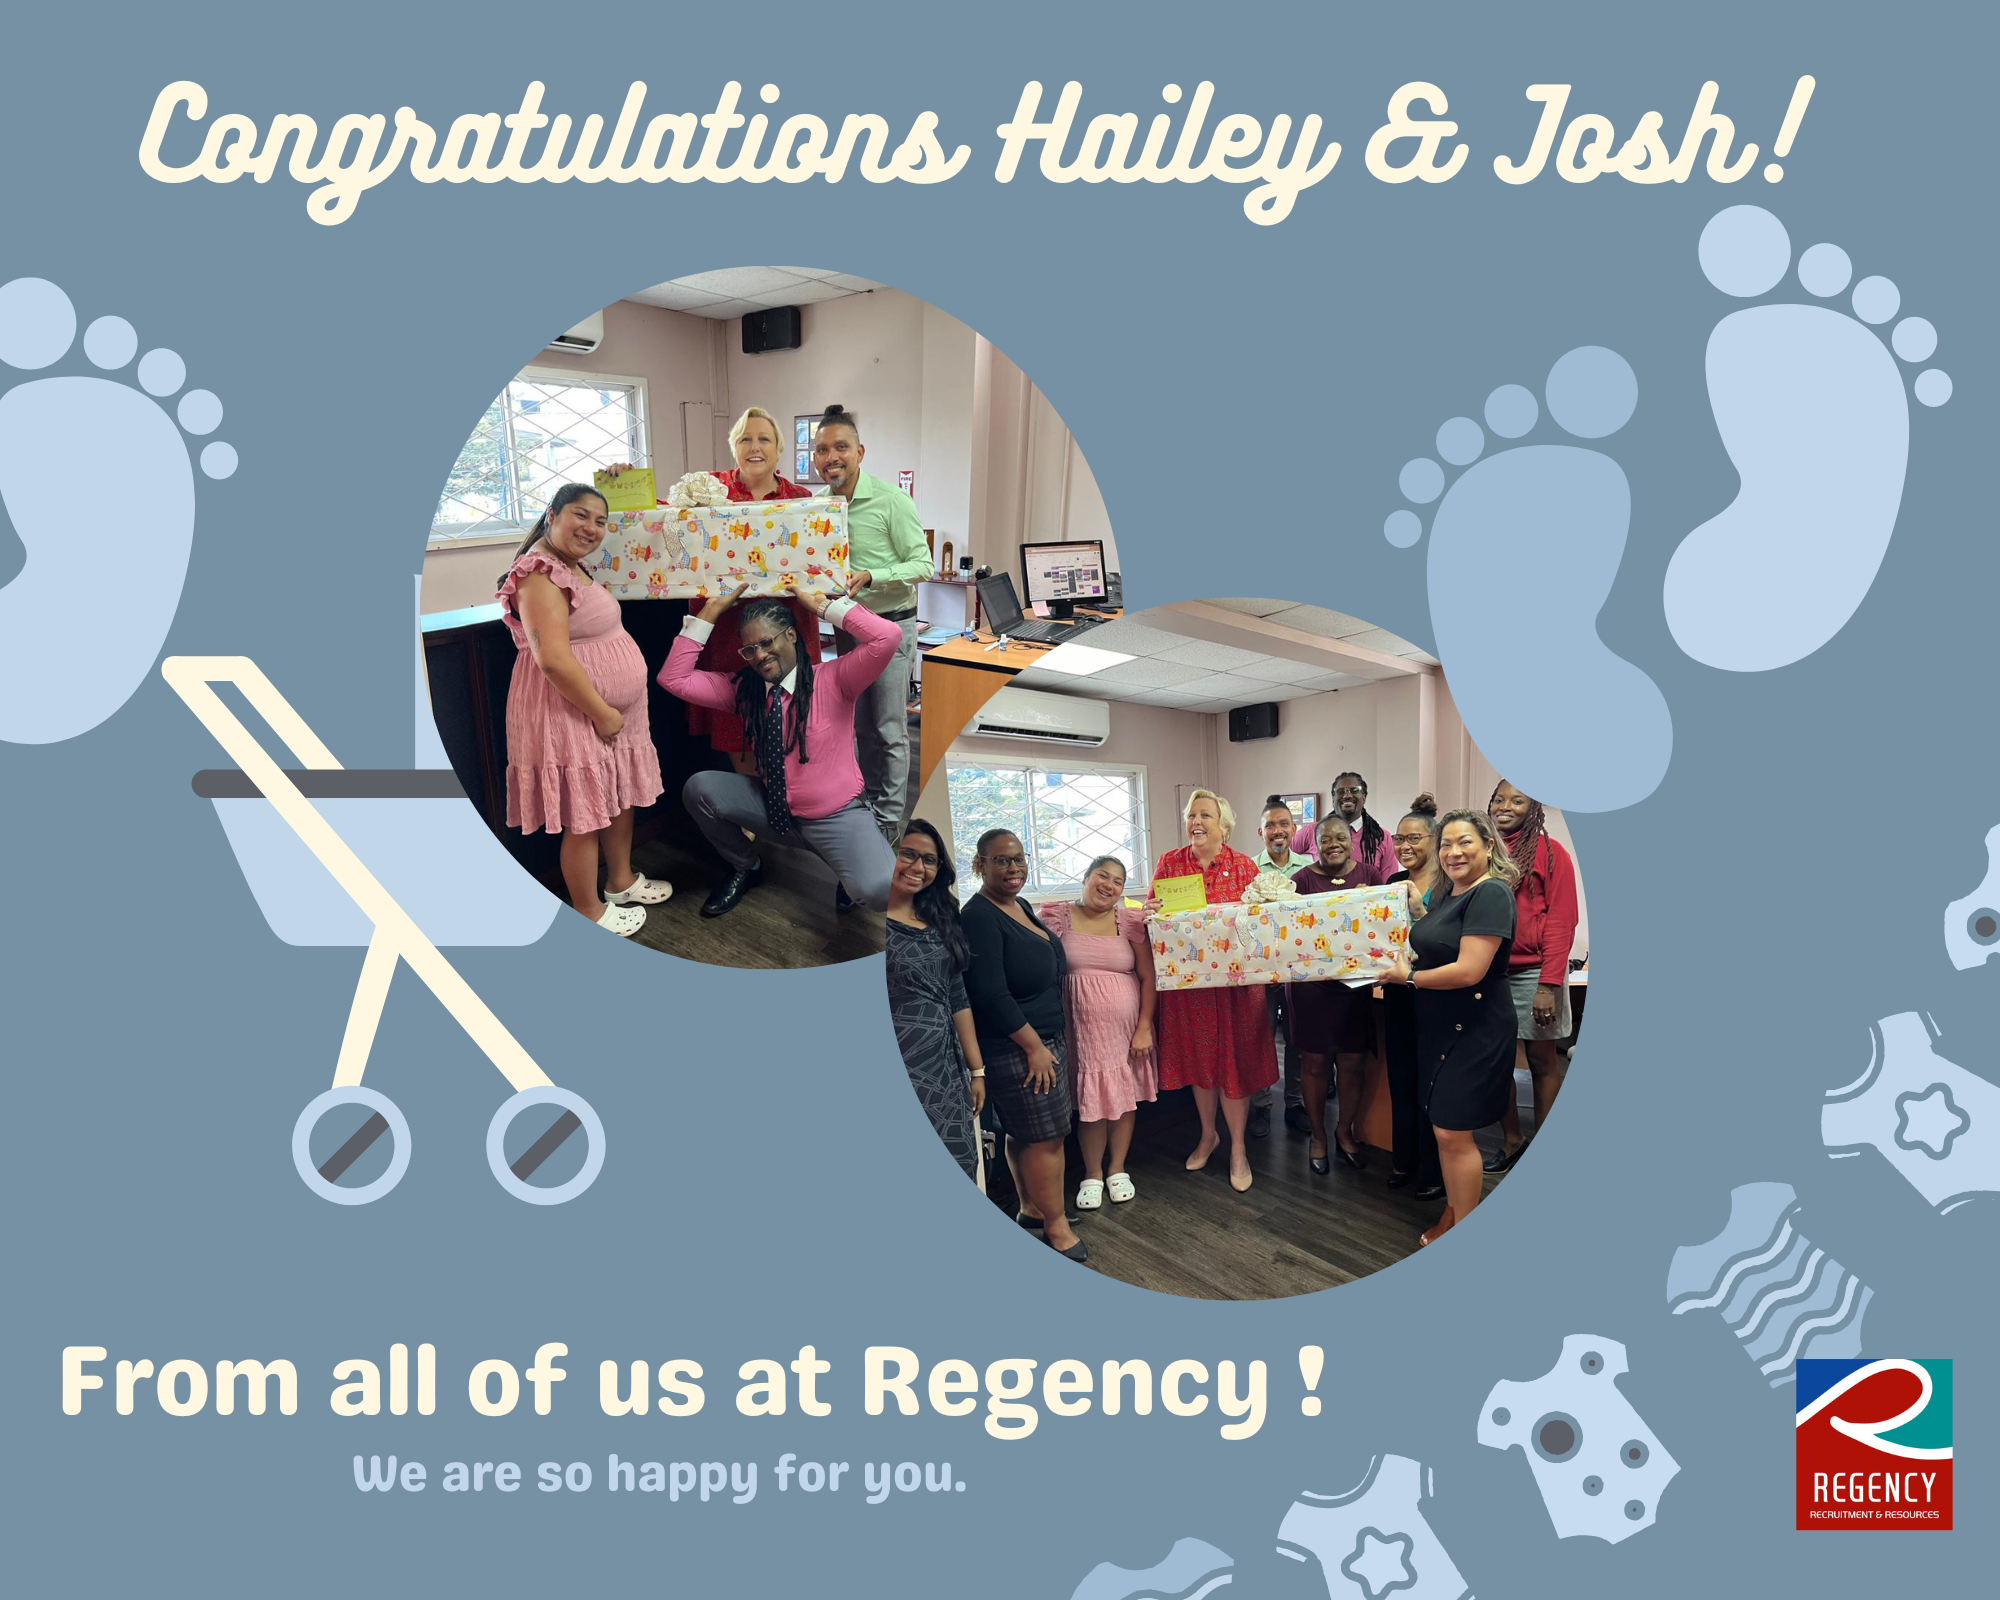 Congratulations Hailey!